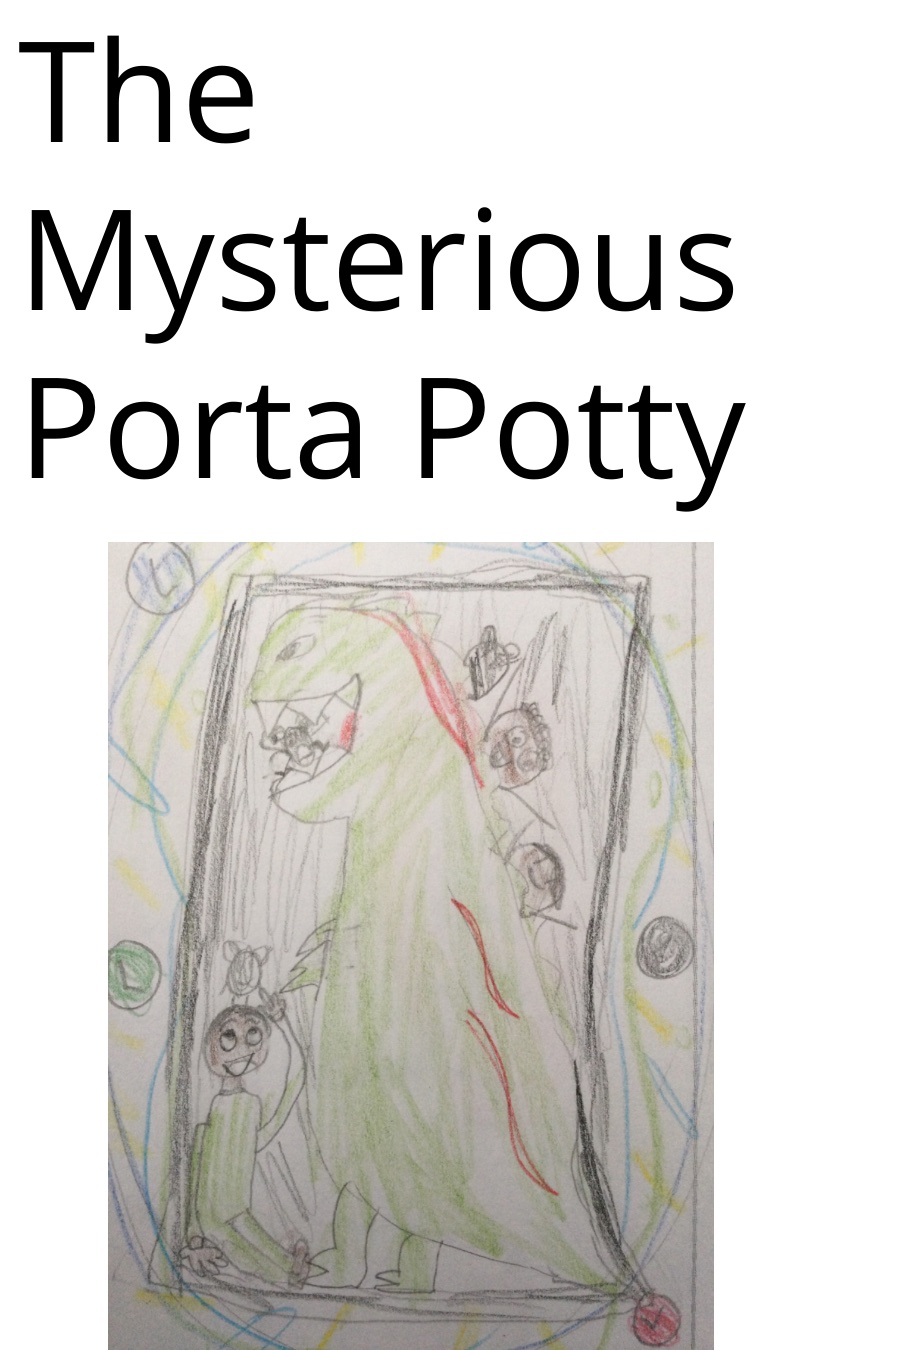 The Mysterious Porta Potty by Henry C